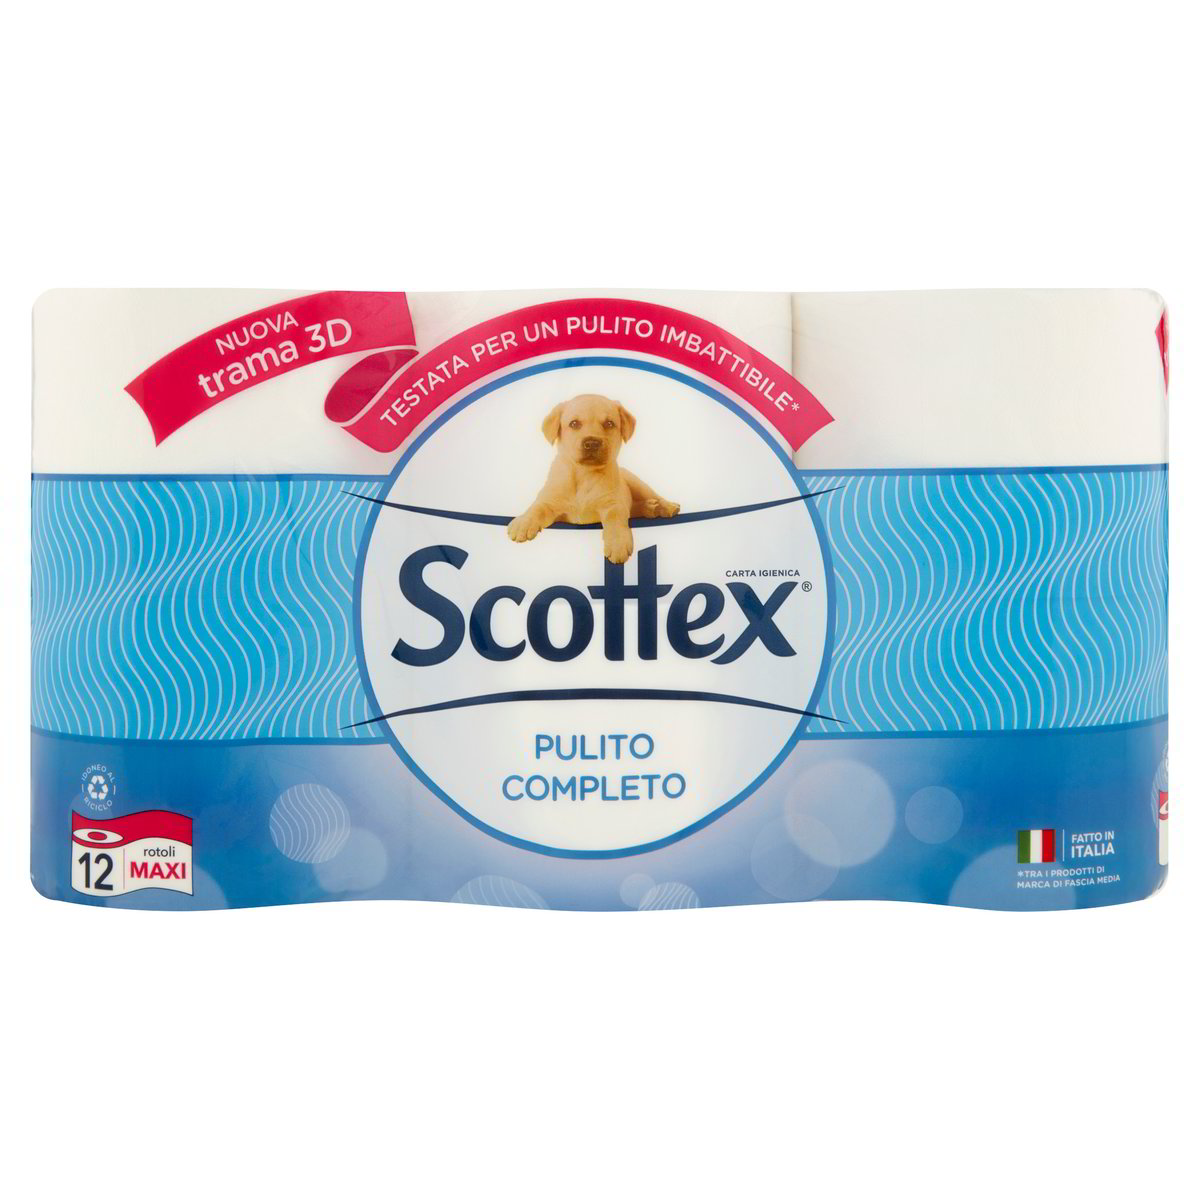 Scottex Original Carta Igienica 32 Rotoli